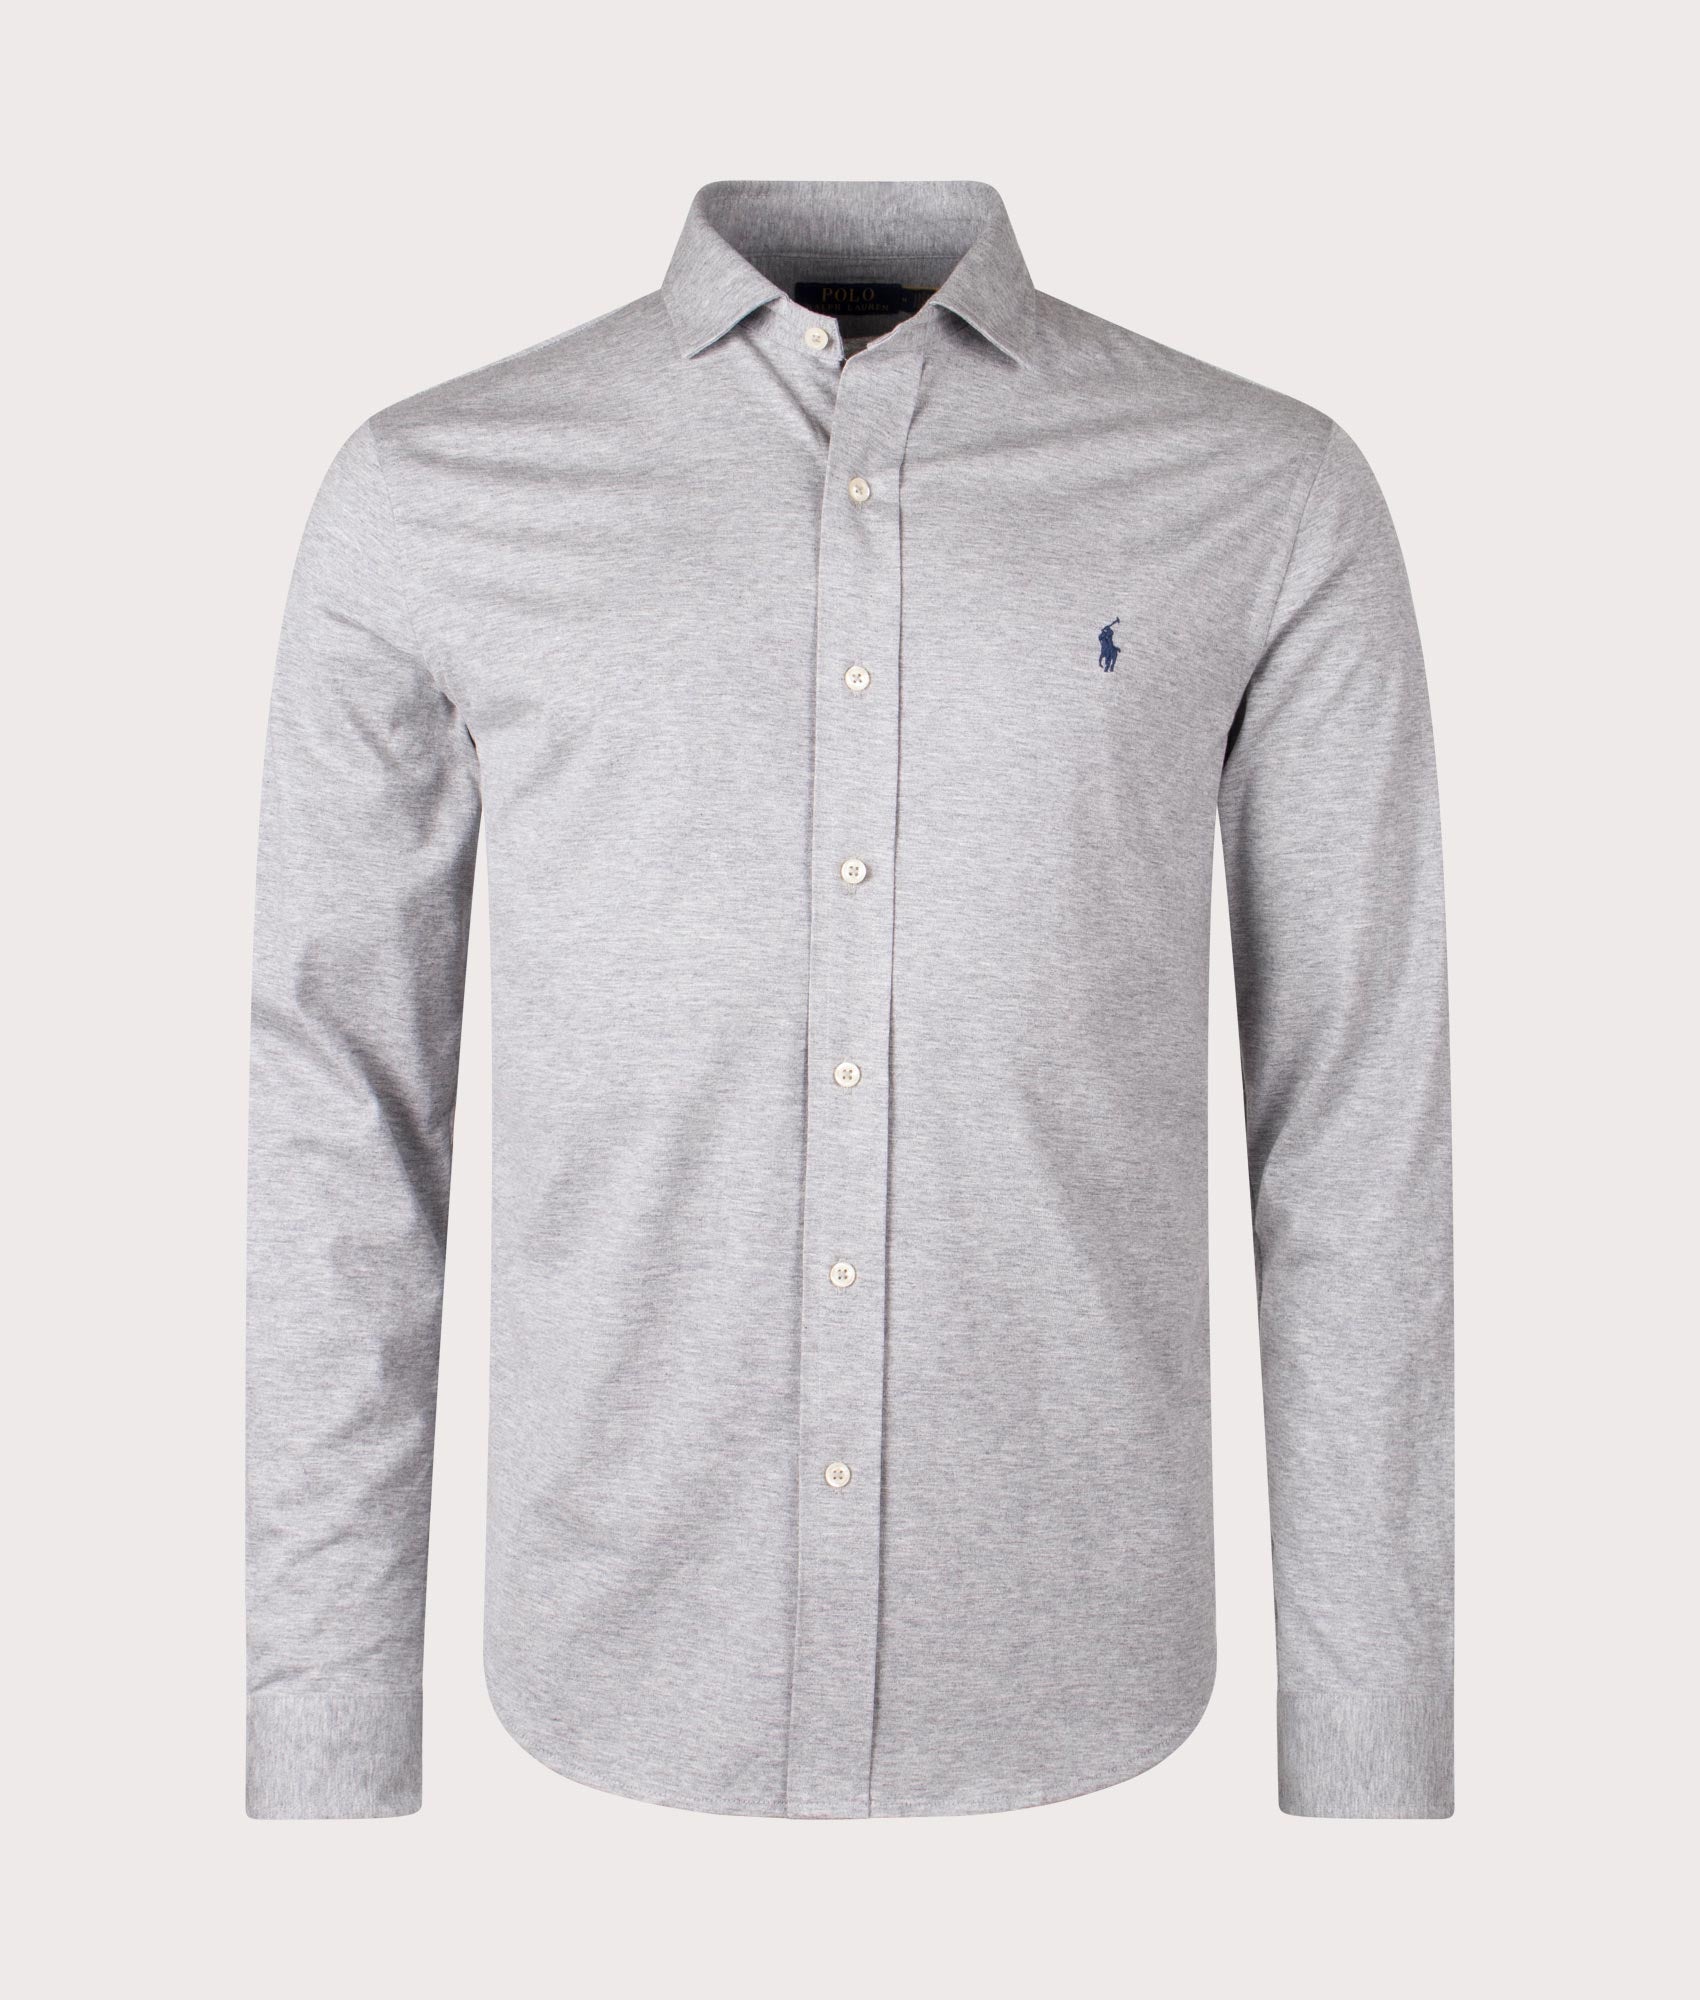 Polo Ralph Lauren Mens Estate Collar Jersey Shirt - Colour: 002 Andover Heather - Size: Large